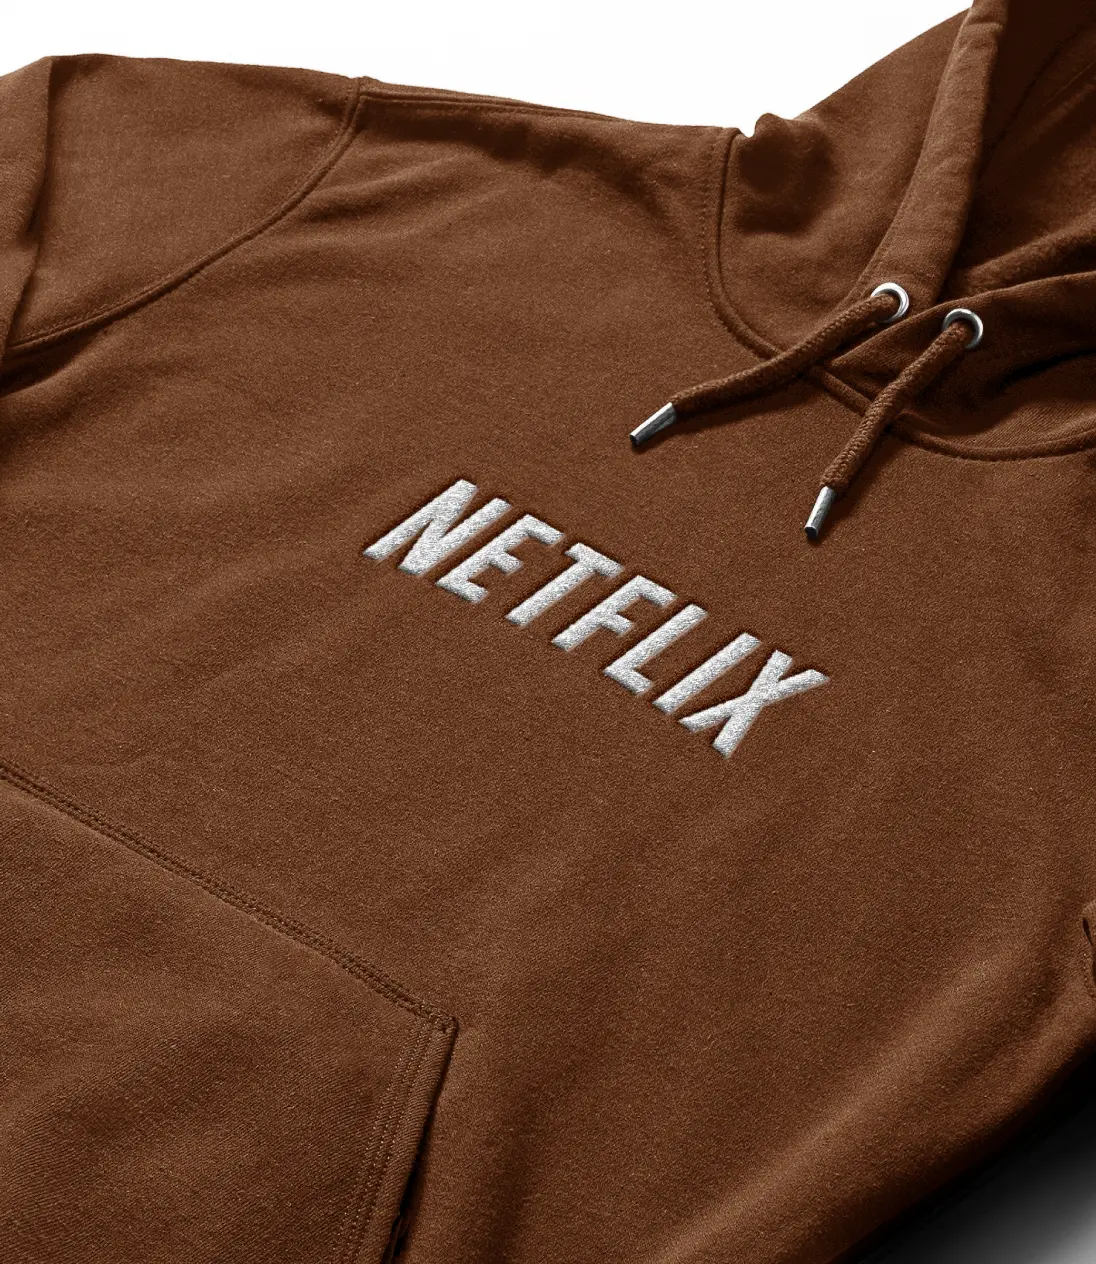 Netflix hoodie